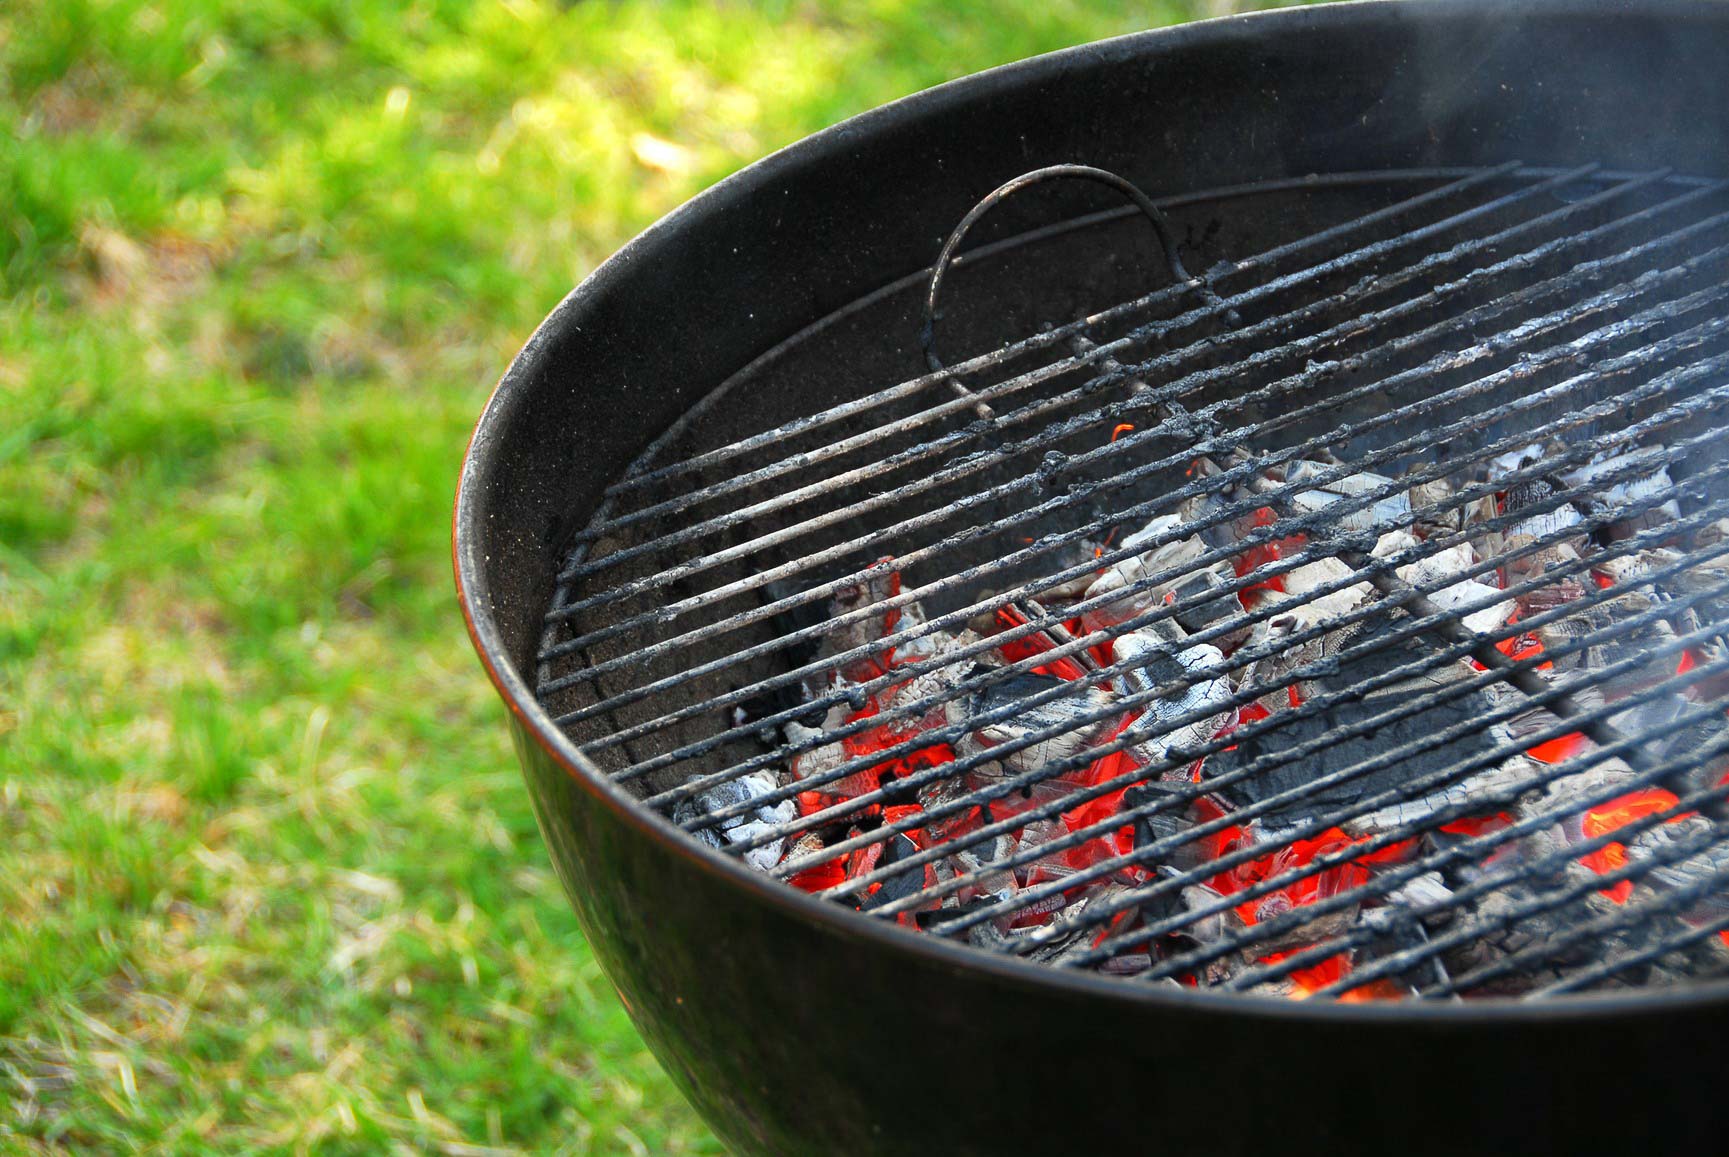 Wood burning barbeque, Source: Photodune.net